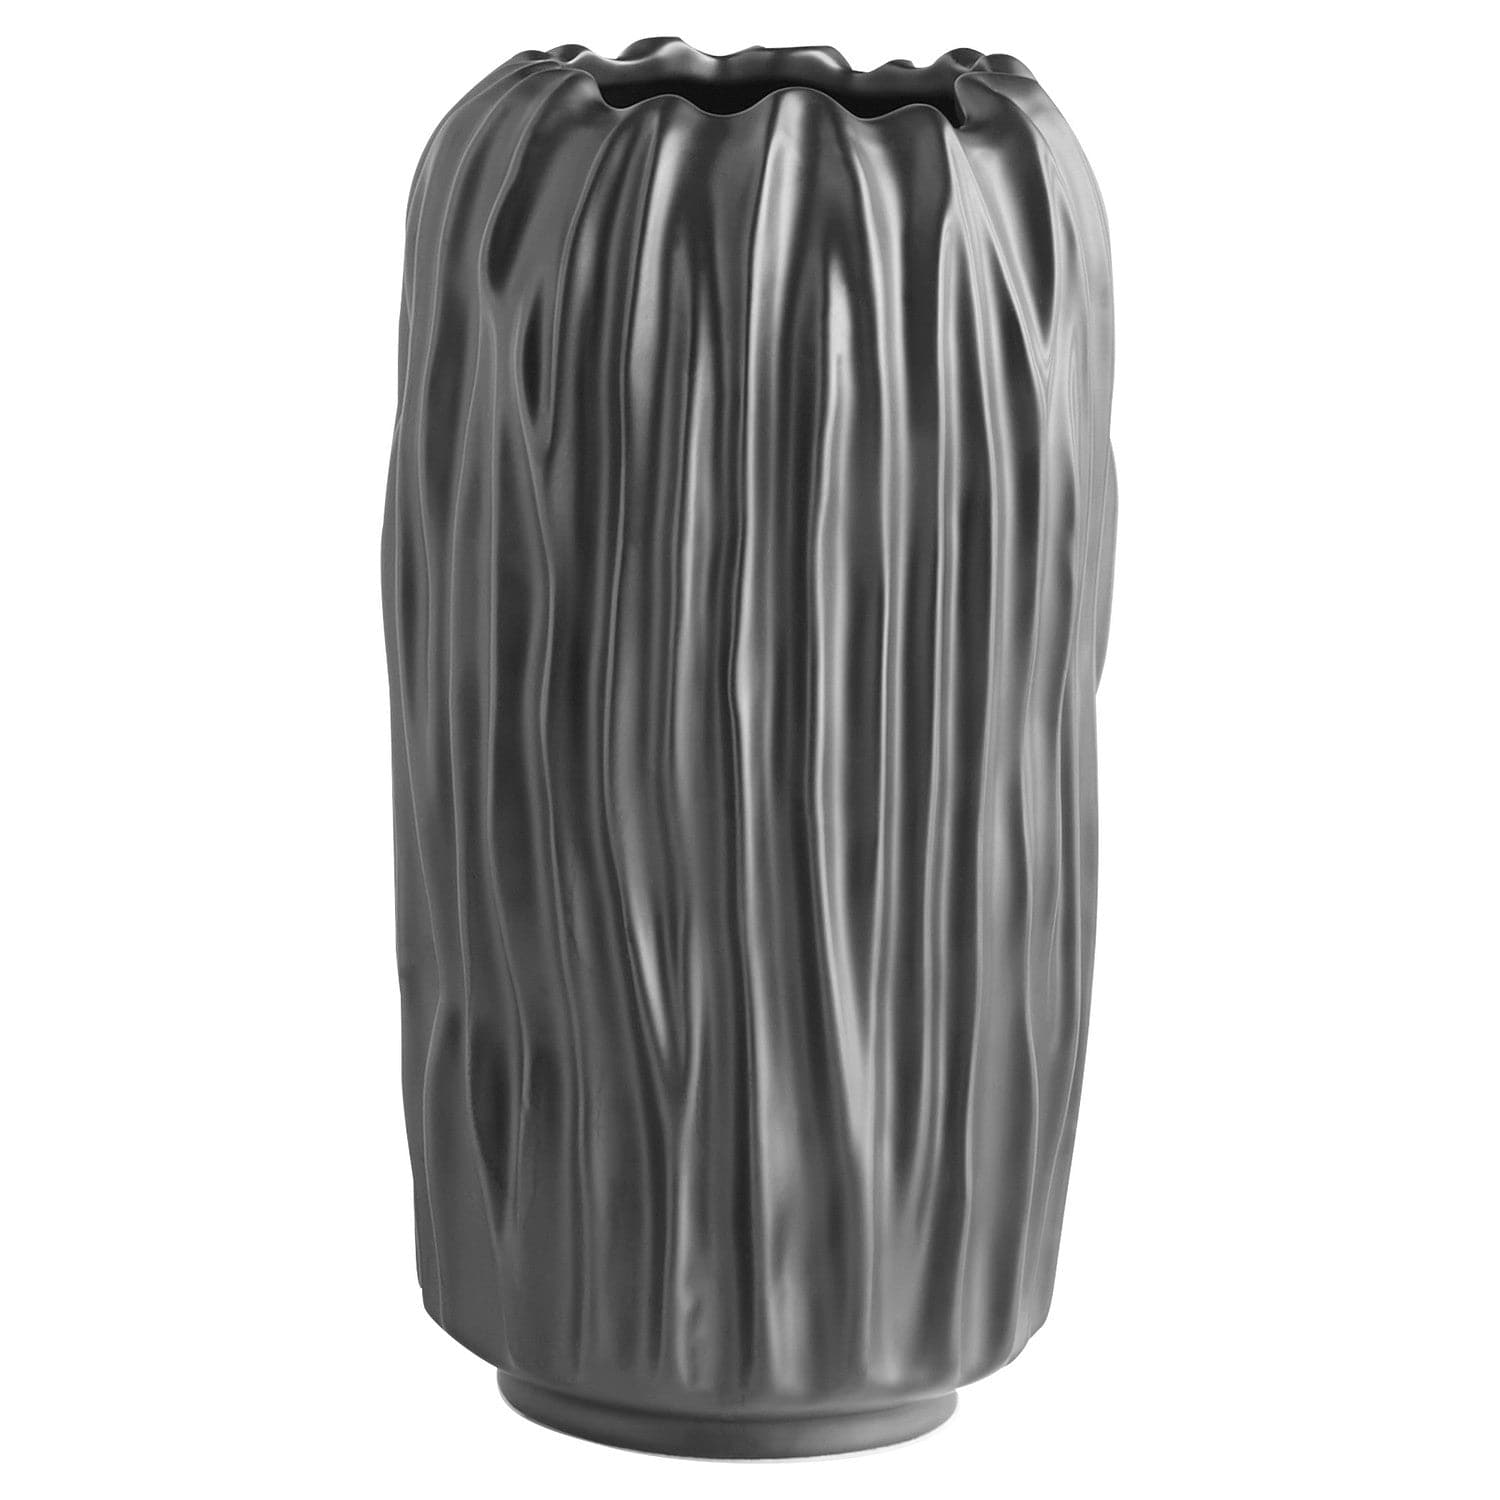 Cyan - 11477 - Vase - Black